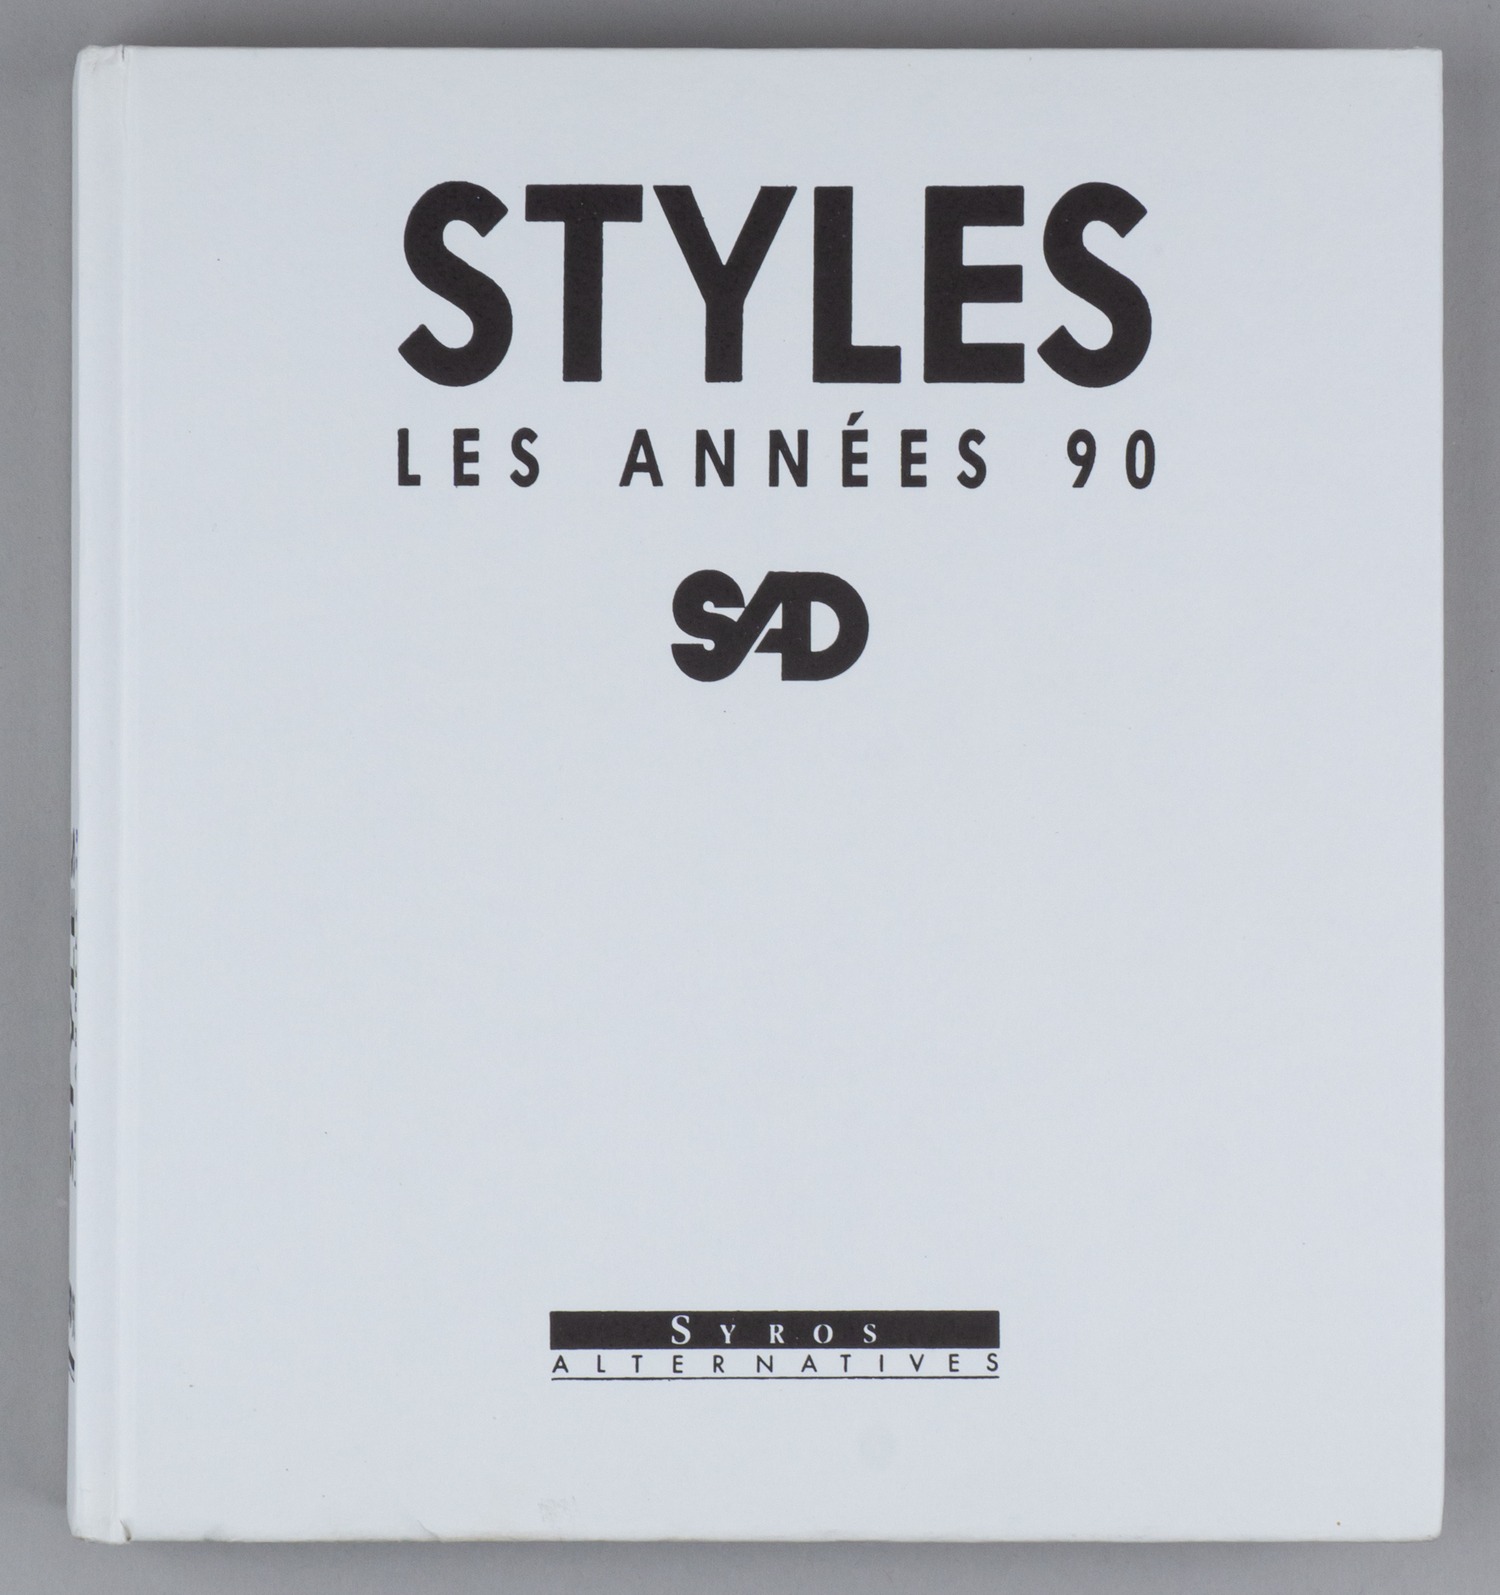 Стили 90-х (Berthet Jean-Louis, Khalifa Jean-Pierre. Styles Les Annees 90) (Париж, 1990). С дарственной надписью авторов.